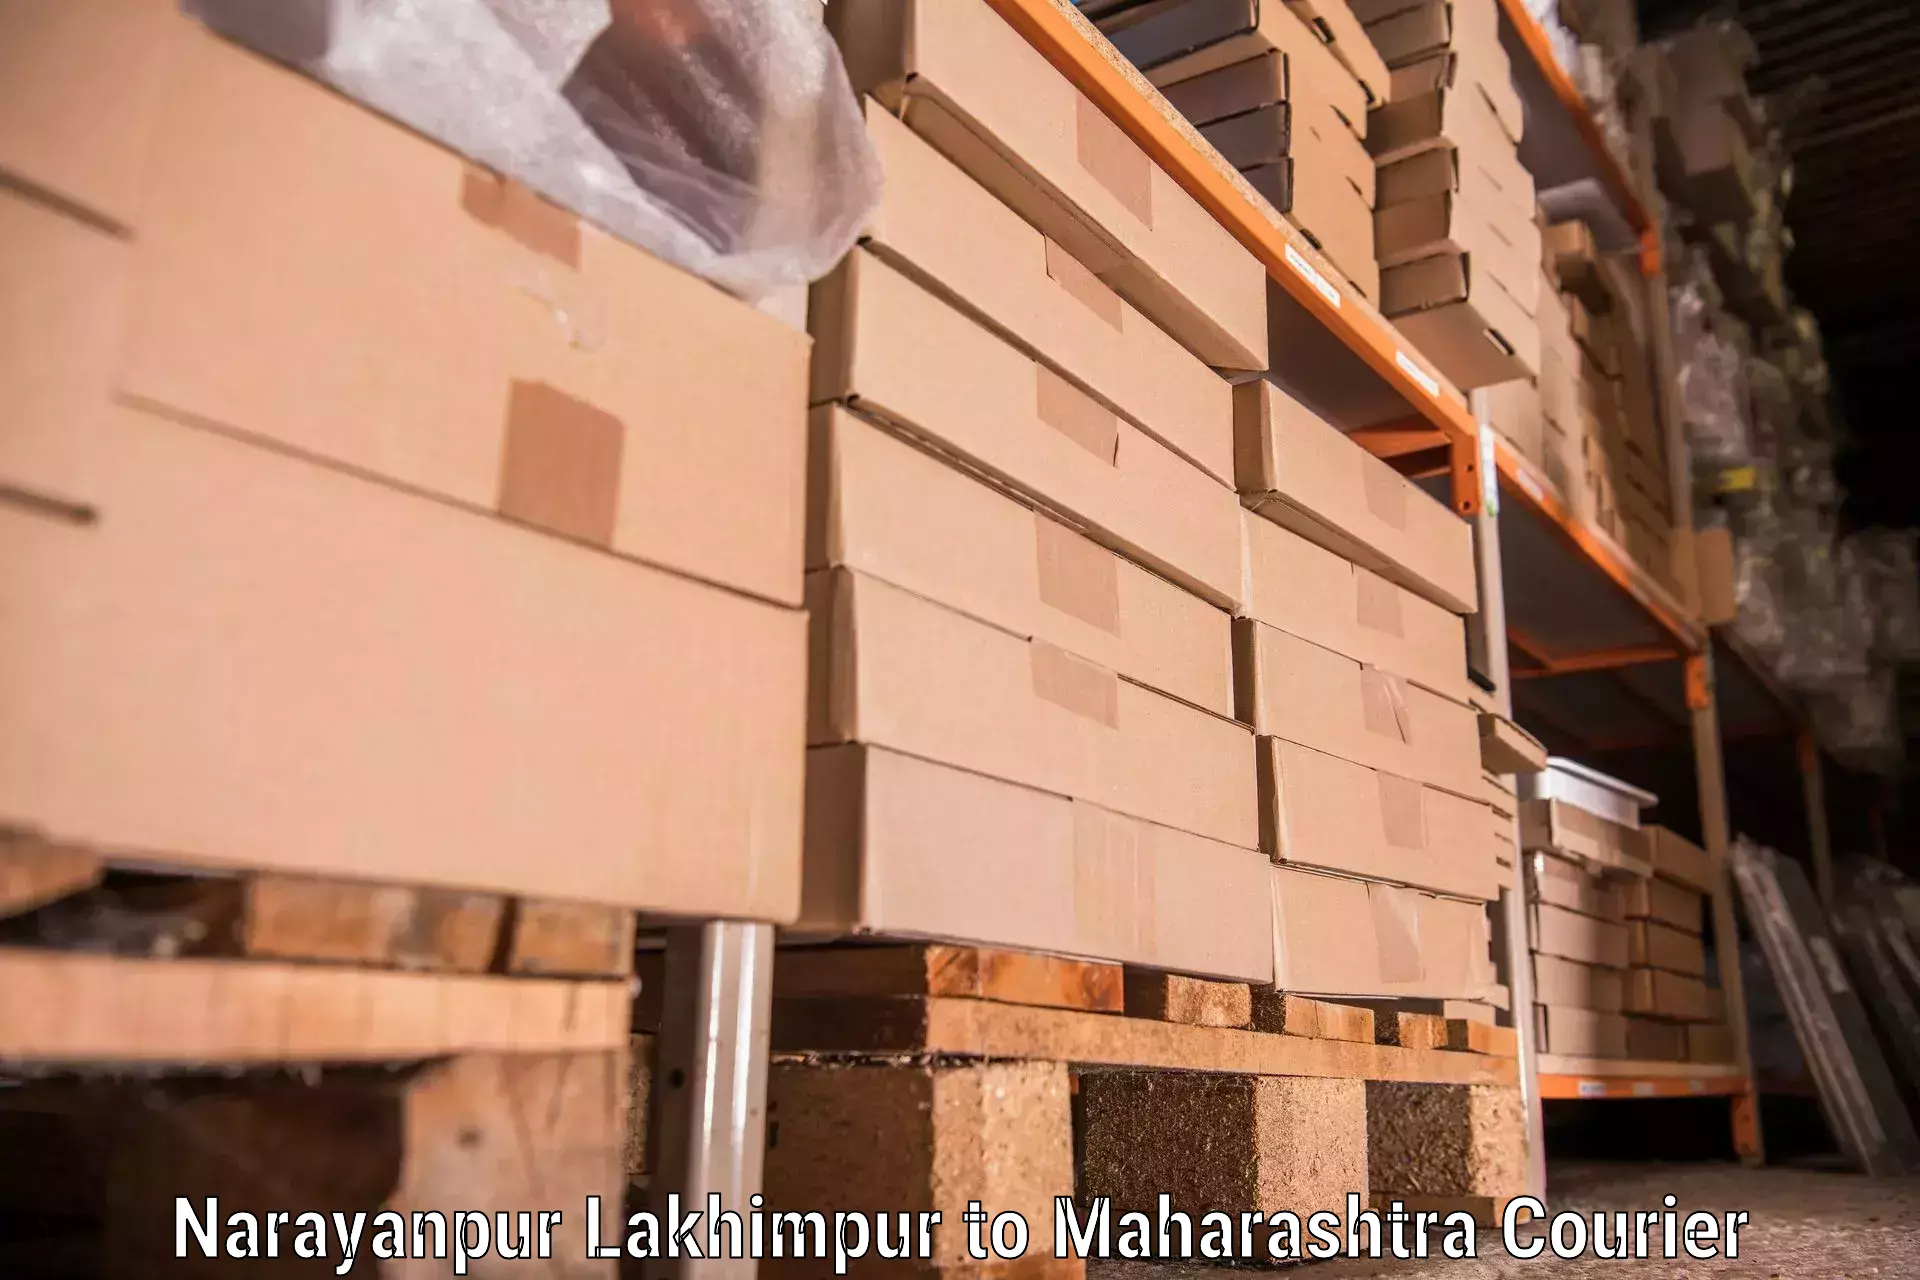 Quality moving company Narayanpur Lakhimpur to Asangi Jat